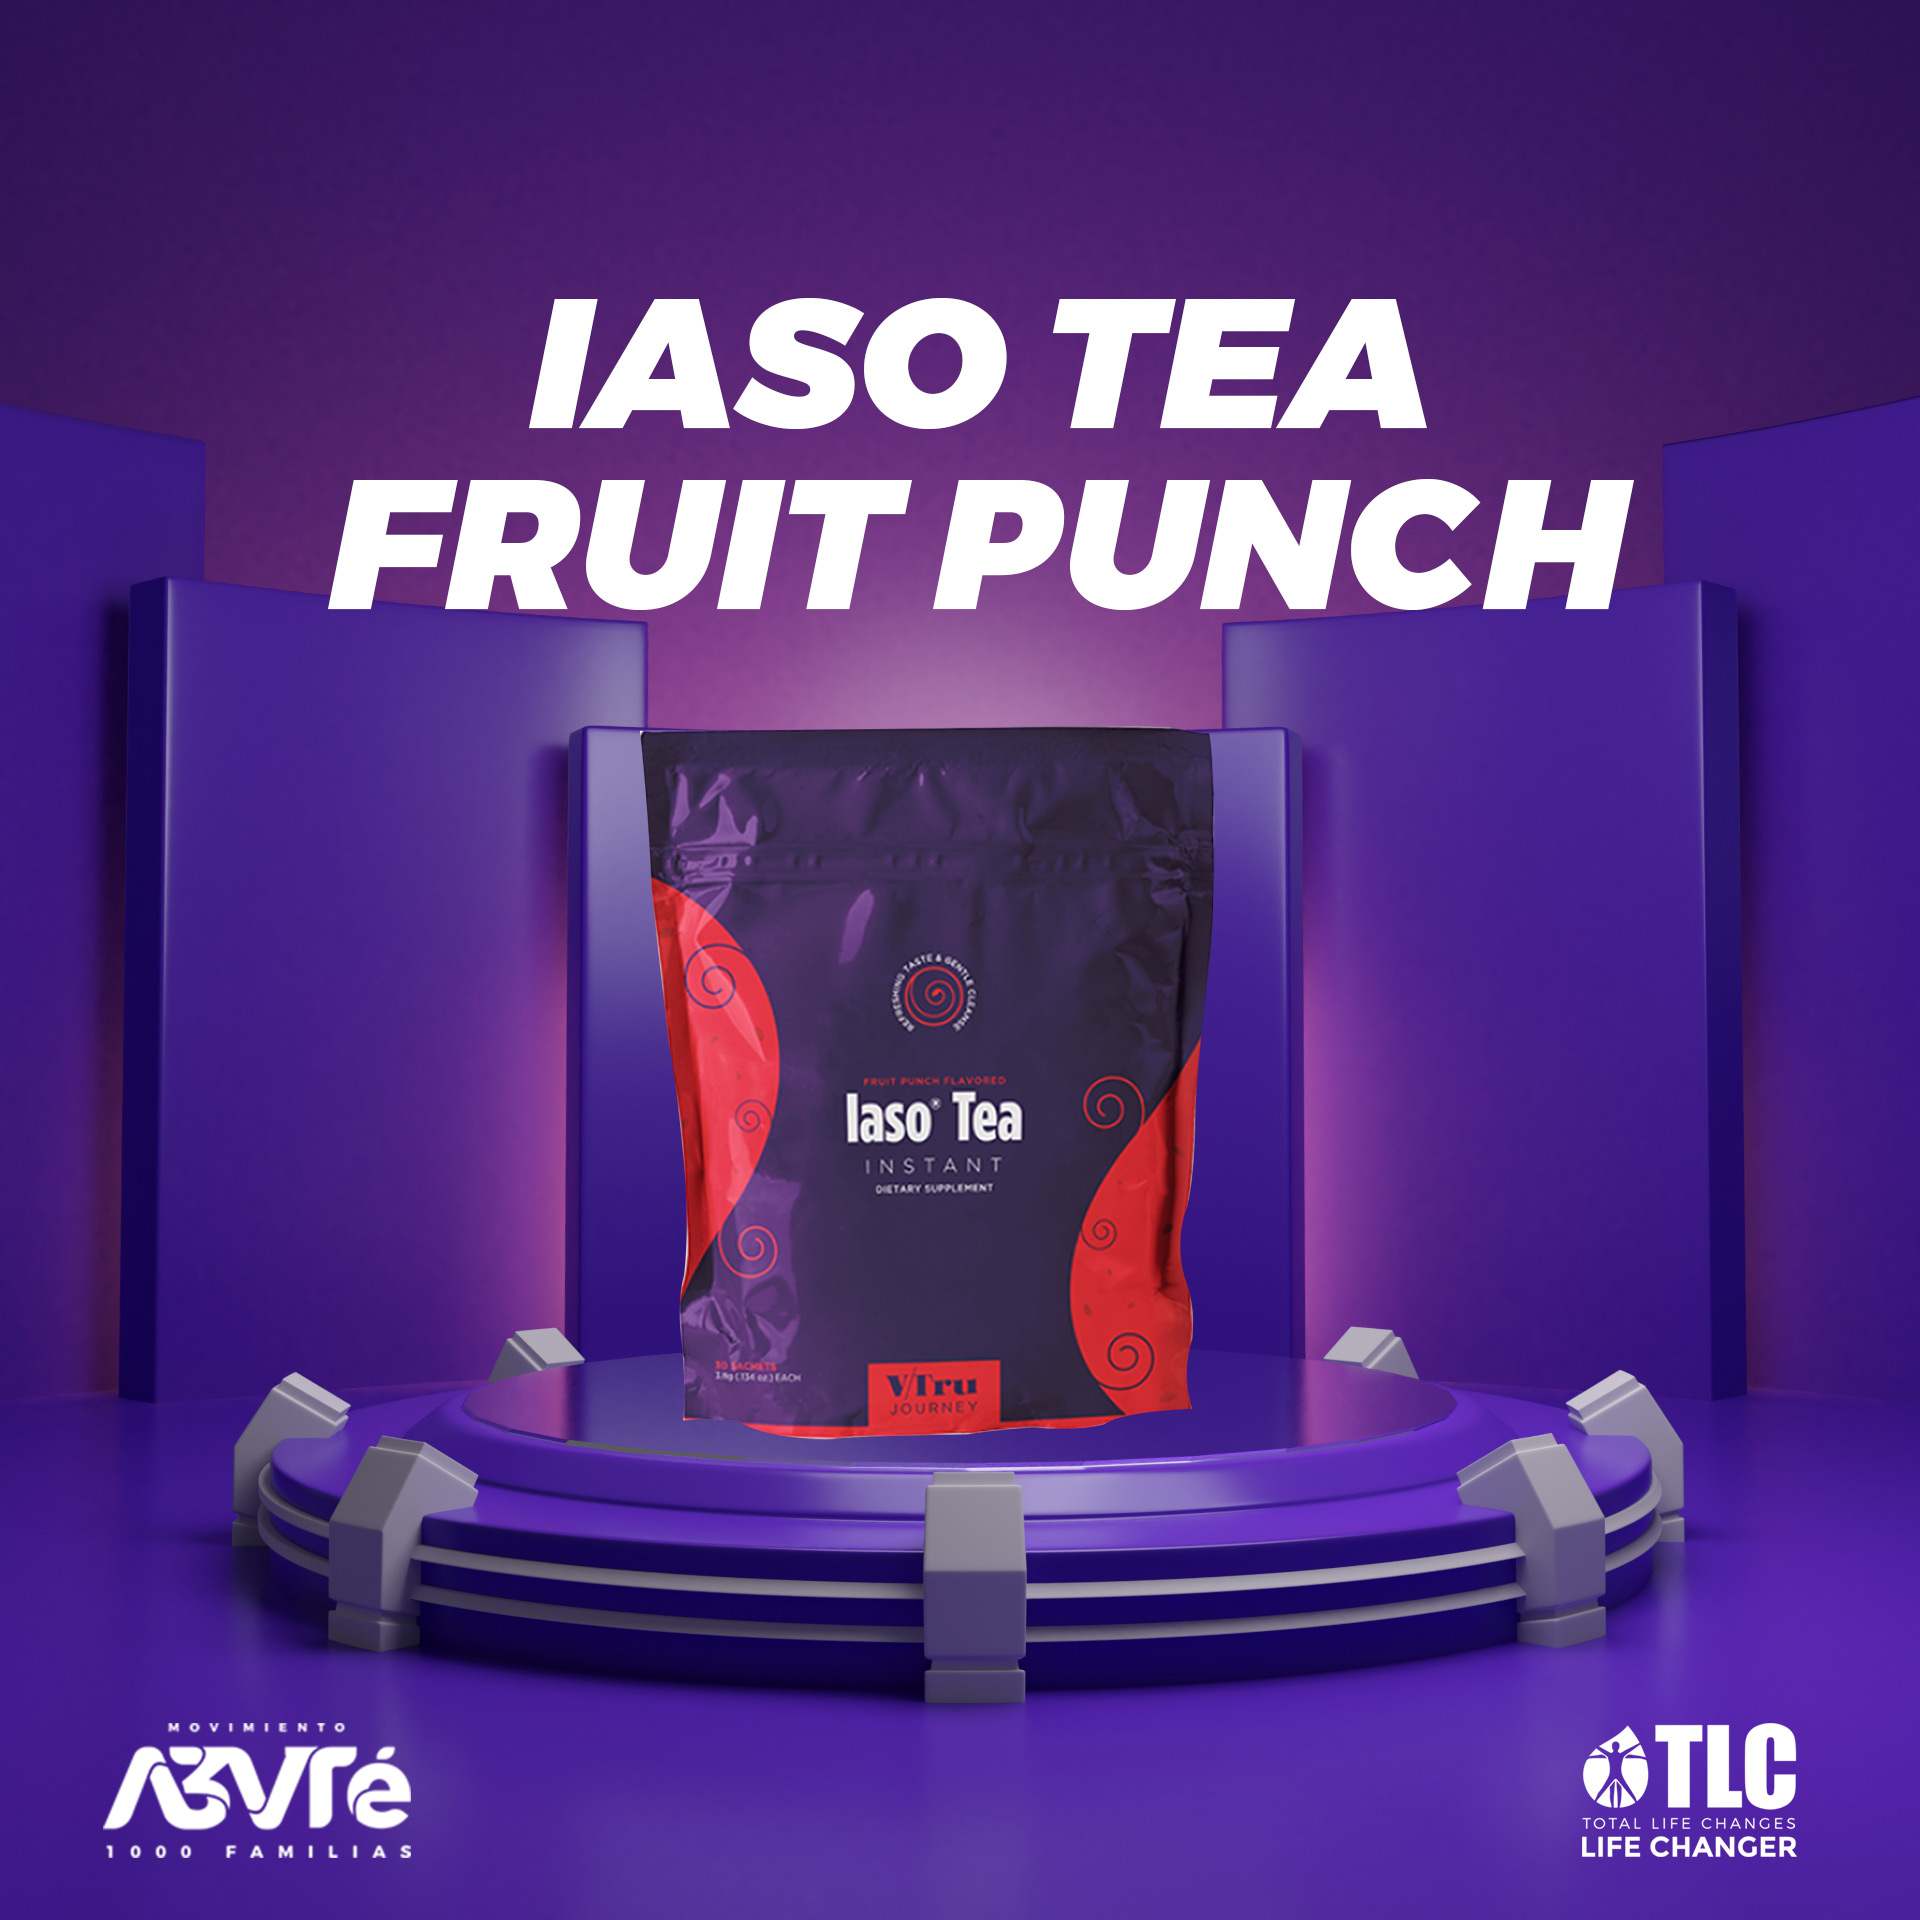 Iaso Tea Fruit Punch